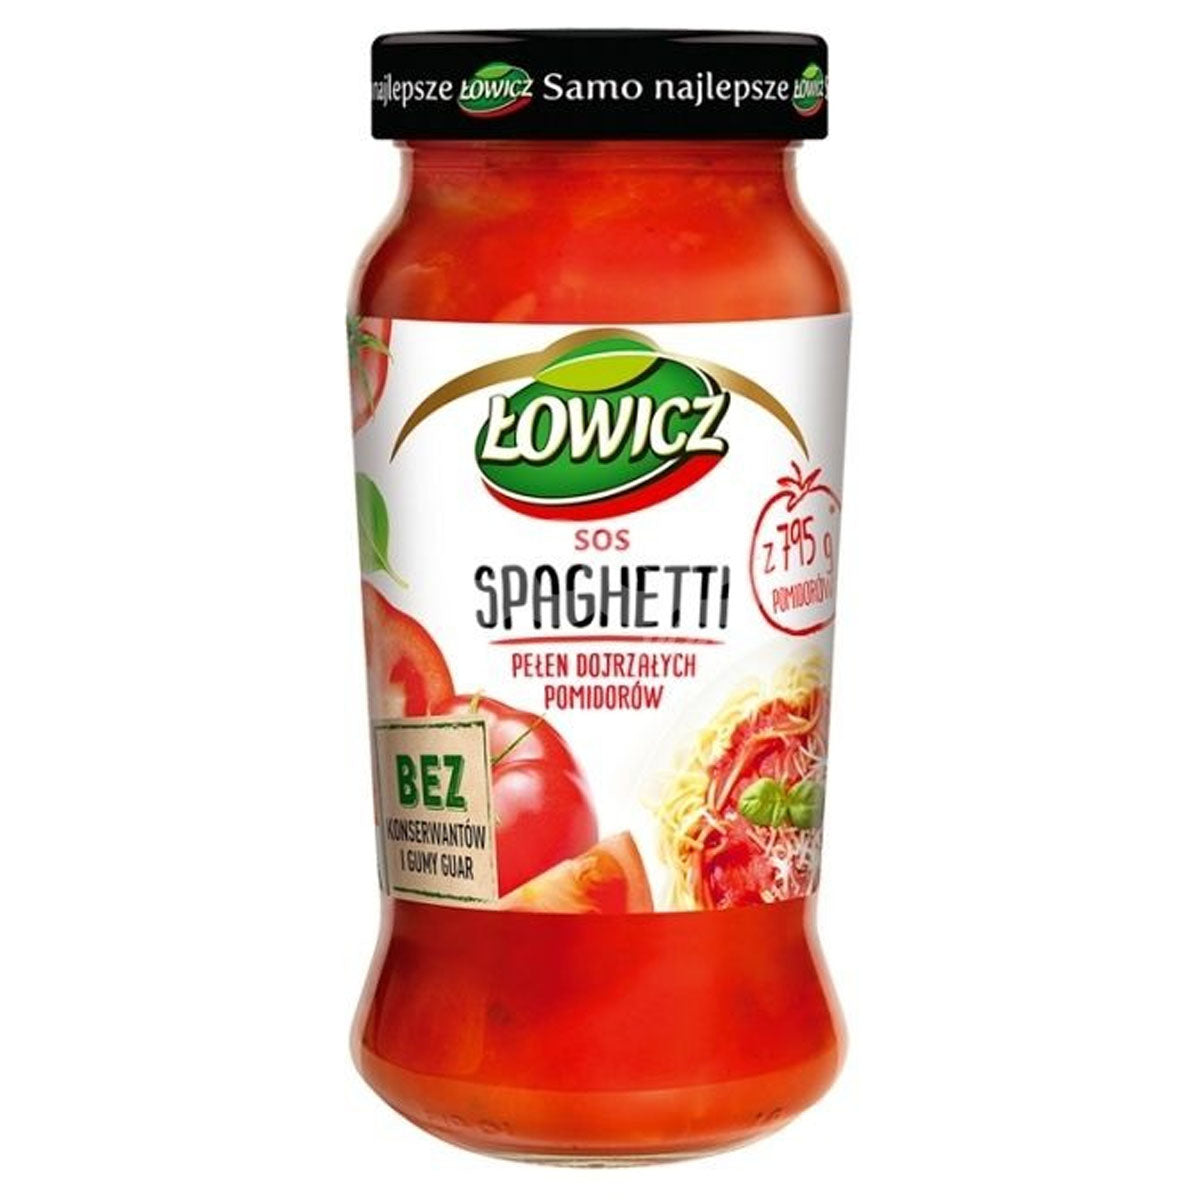 Lowick - Spaghetti Sauce - 500g - Continental Food Store